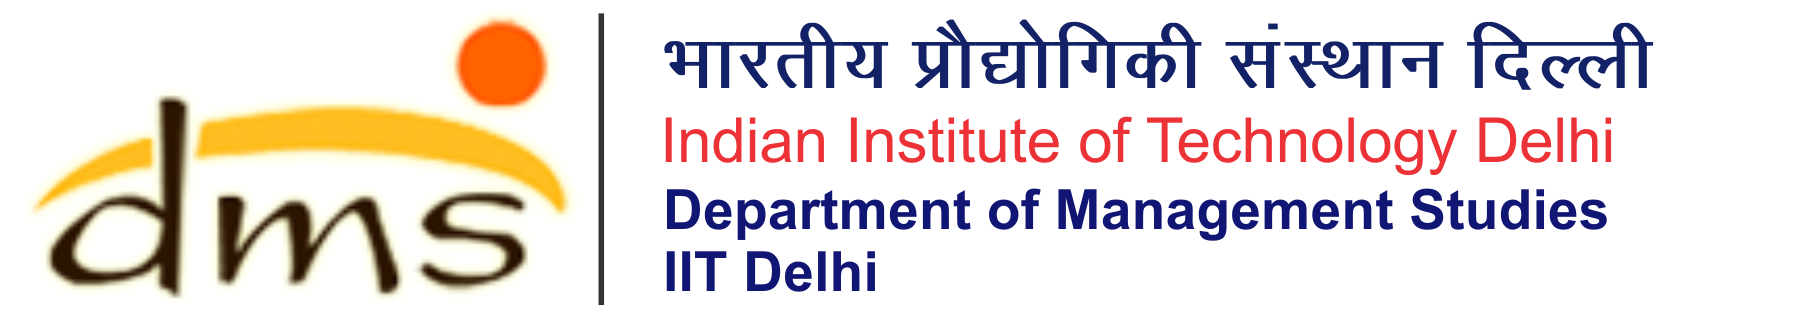 Department of Management Studies - Indian Institute of Technology Delhi (DMS IITD)